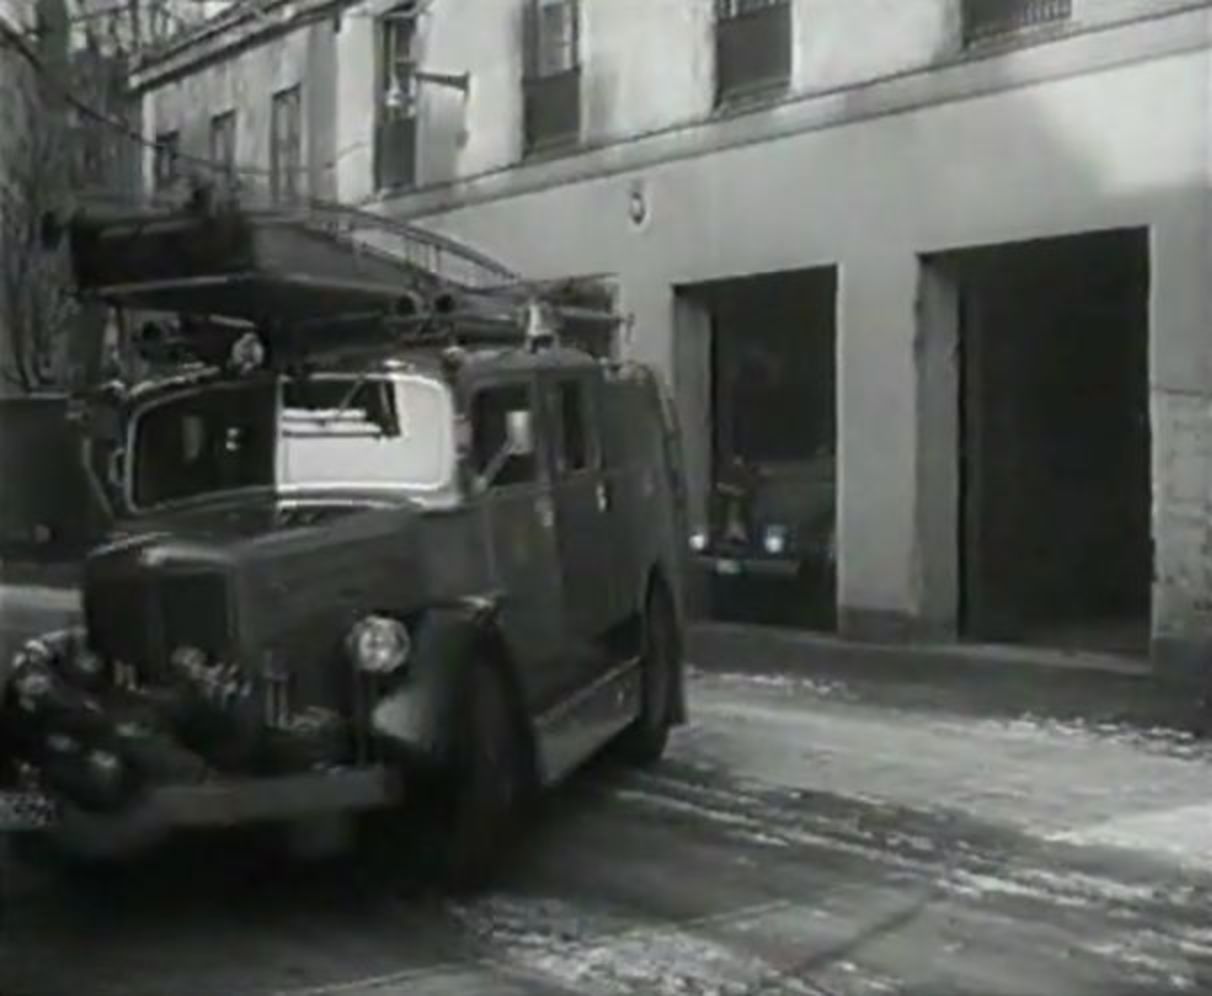 IMCDb.org: Scania-Vabis Unknown in "Anderssonskans Kalle, 1950"